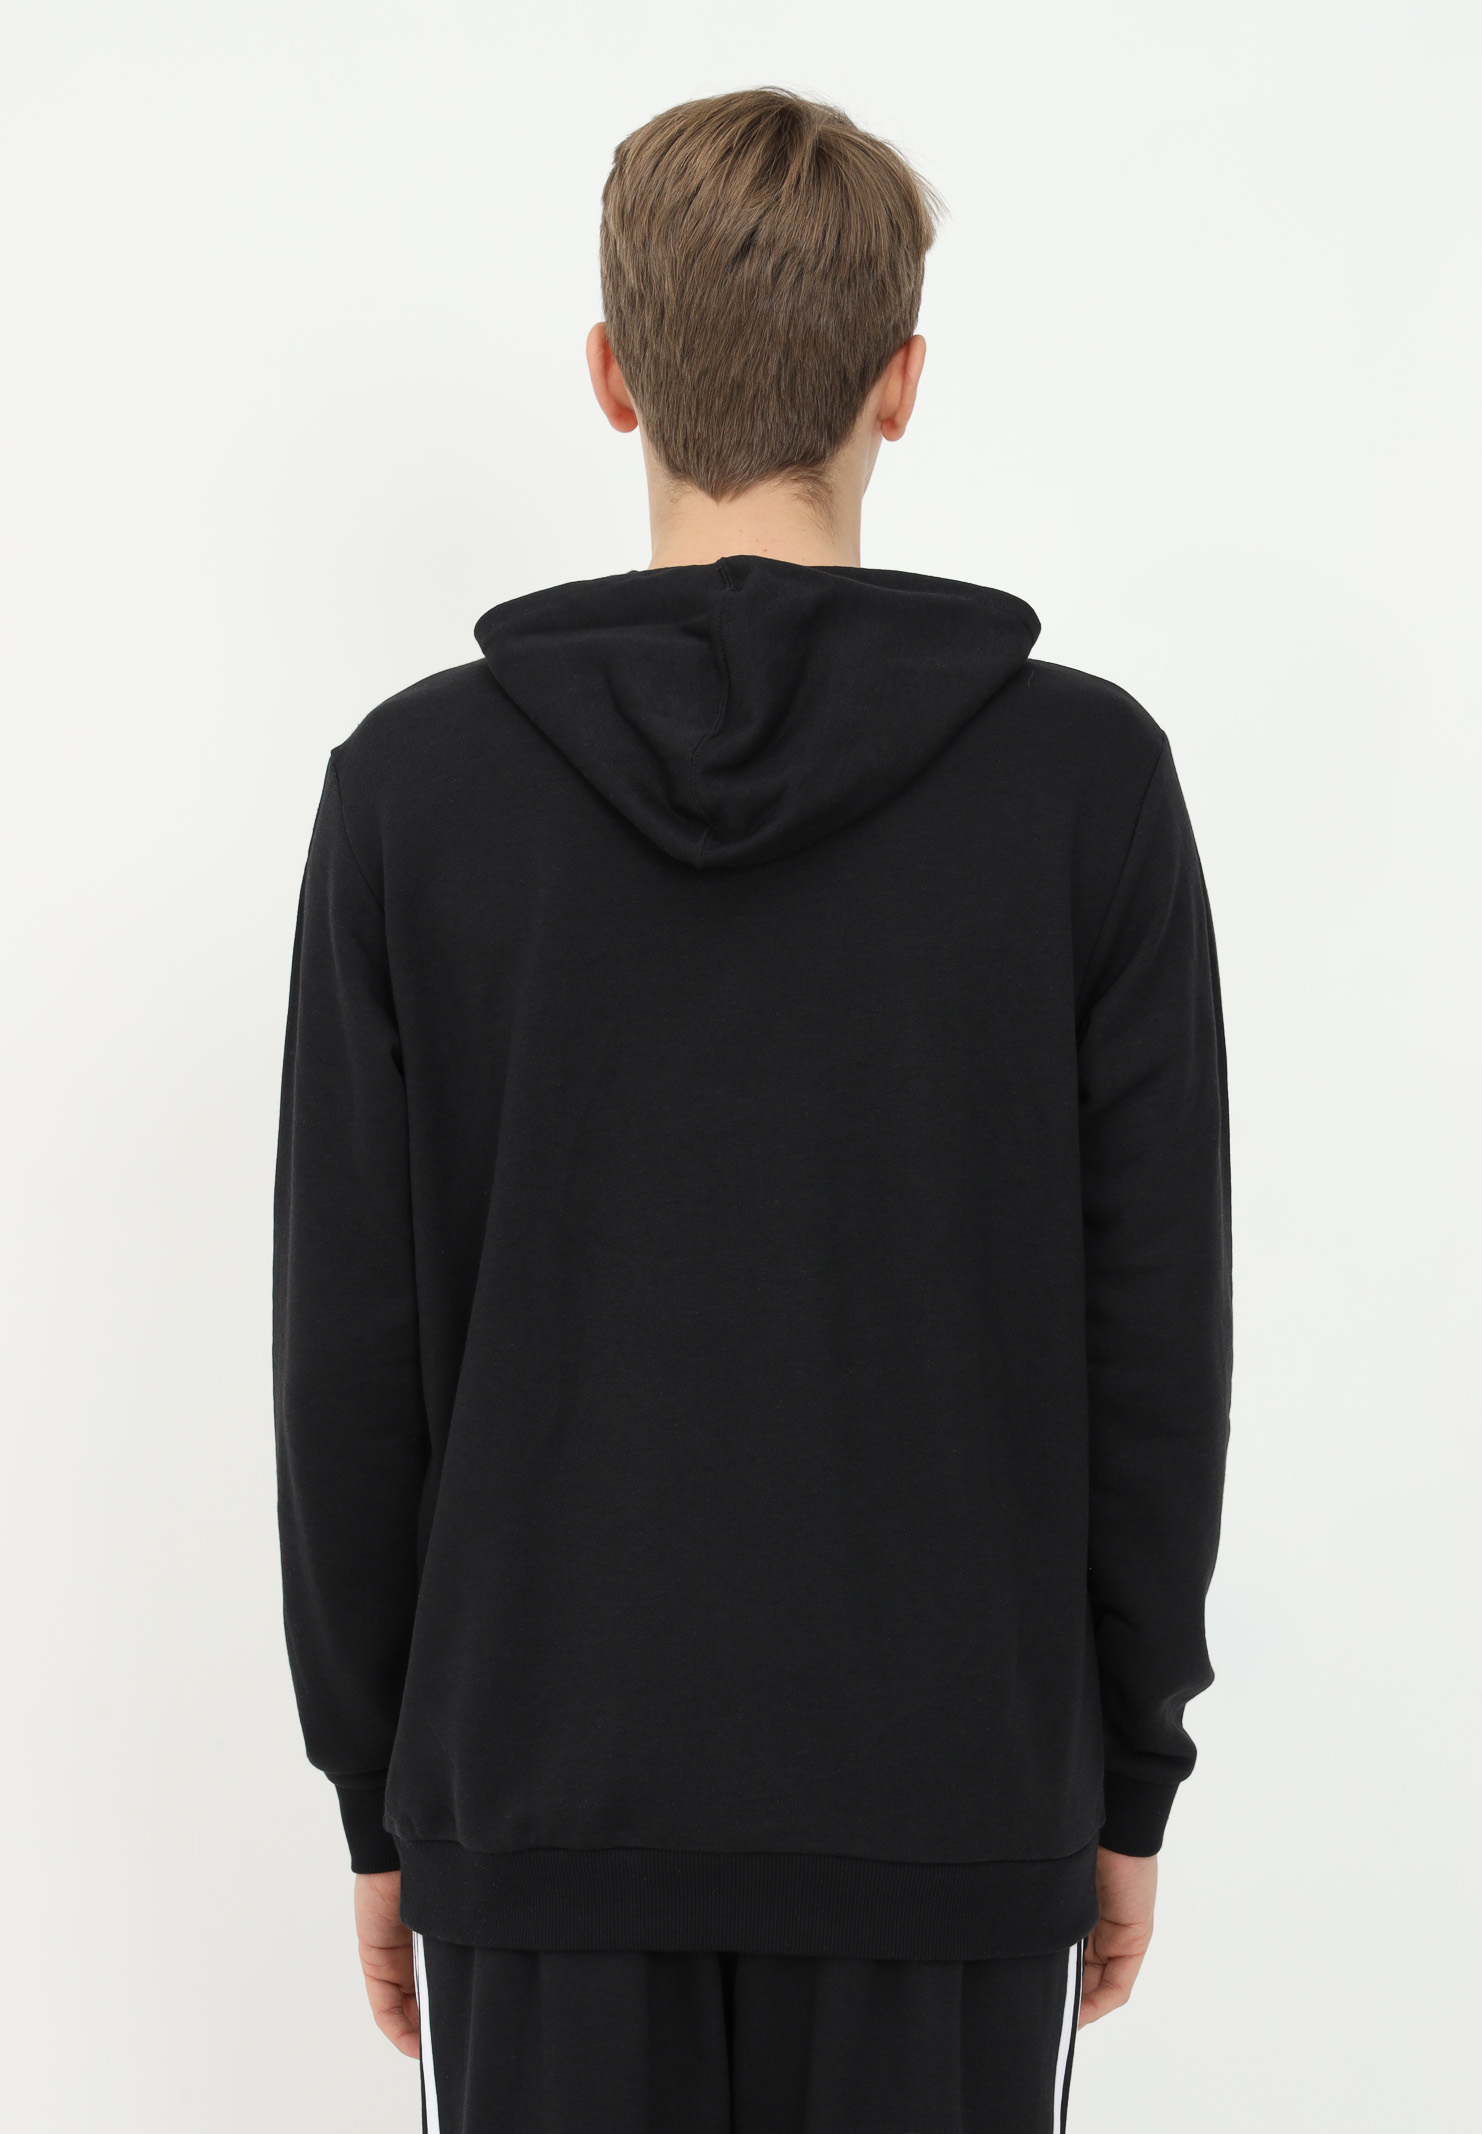 Essentials big logo black hoodie for men ADIDAS | GK9540.